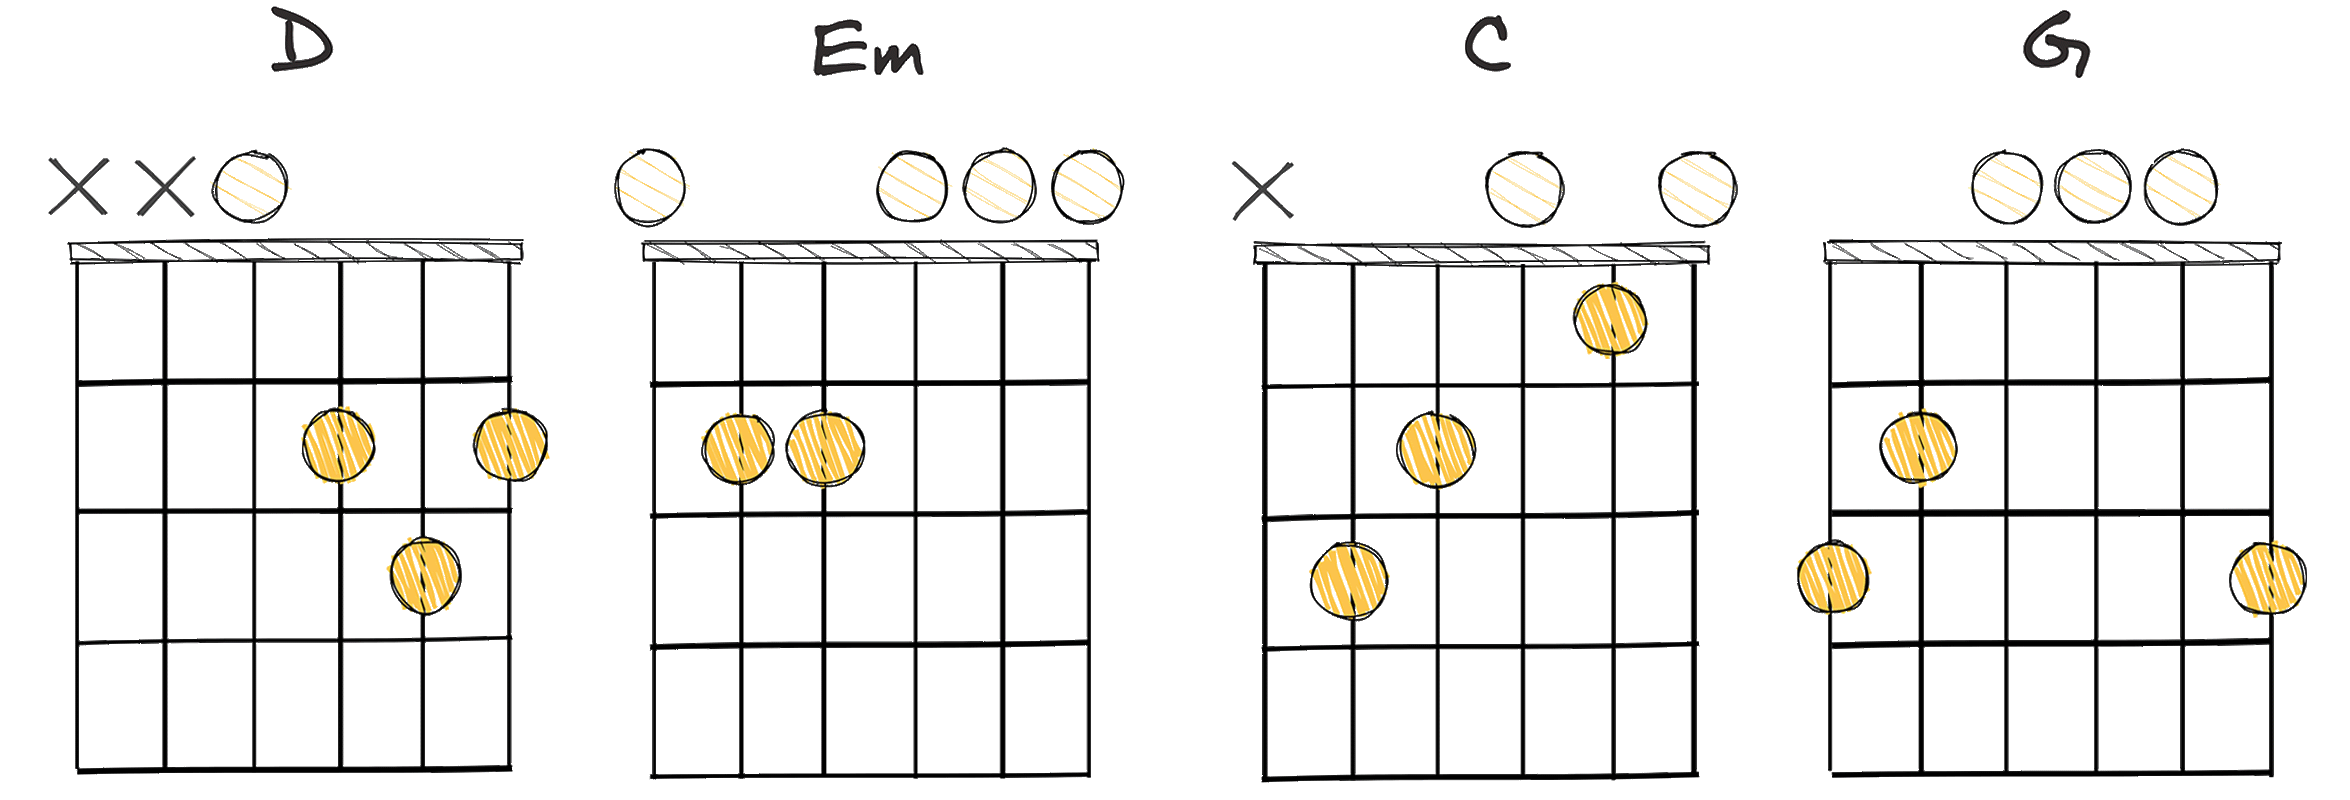 V-vi-IV-I (5-6-4-1) chords diagram